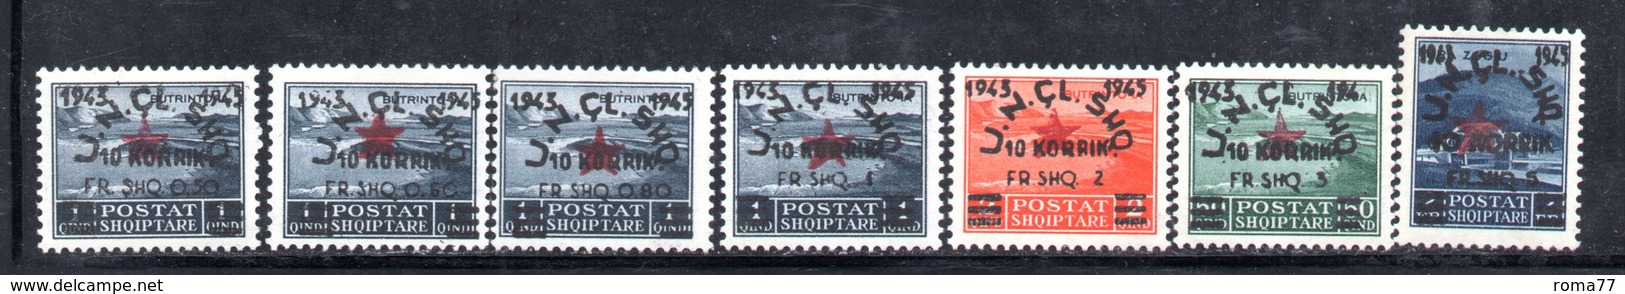 570/1500 - ALBANIA 1945 , Soprastampato Serie Yvert N. 319/325  ***  MNH - Albania